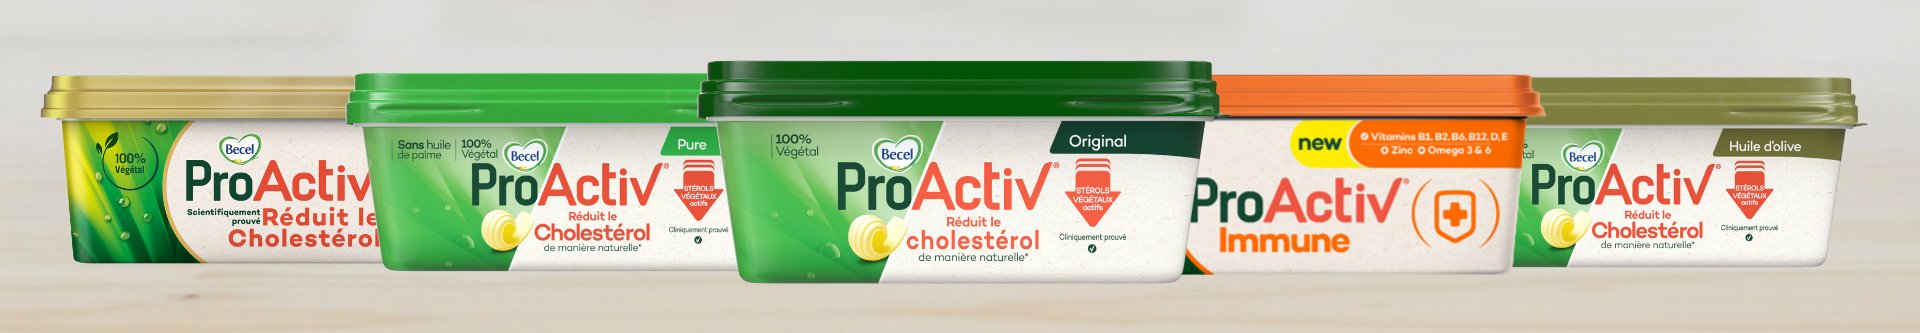 Découvrez nos produits anti-cholestérol - Becel ProActiv